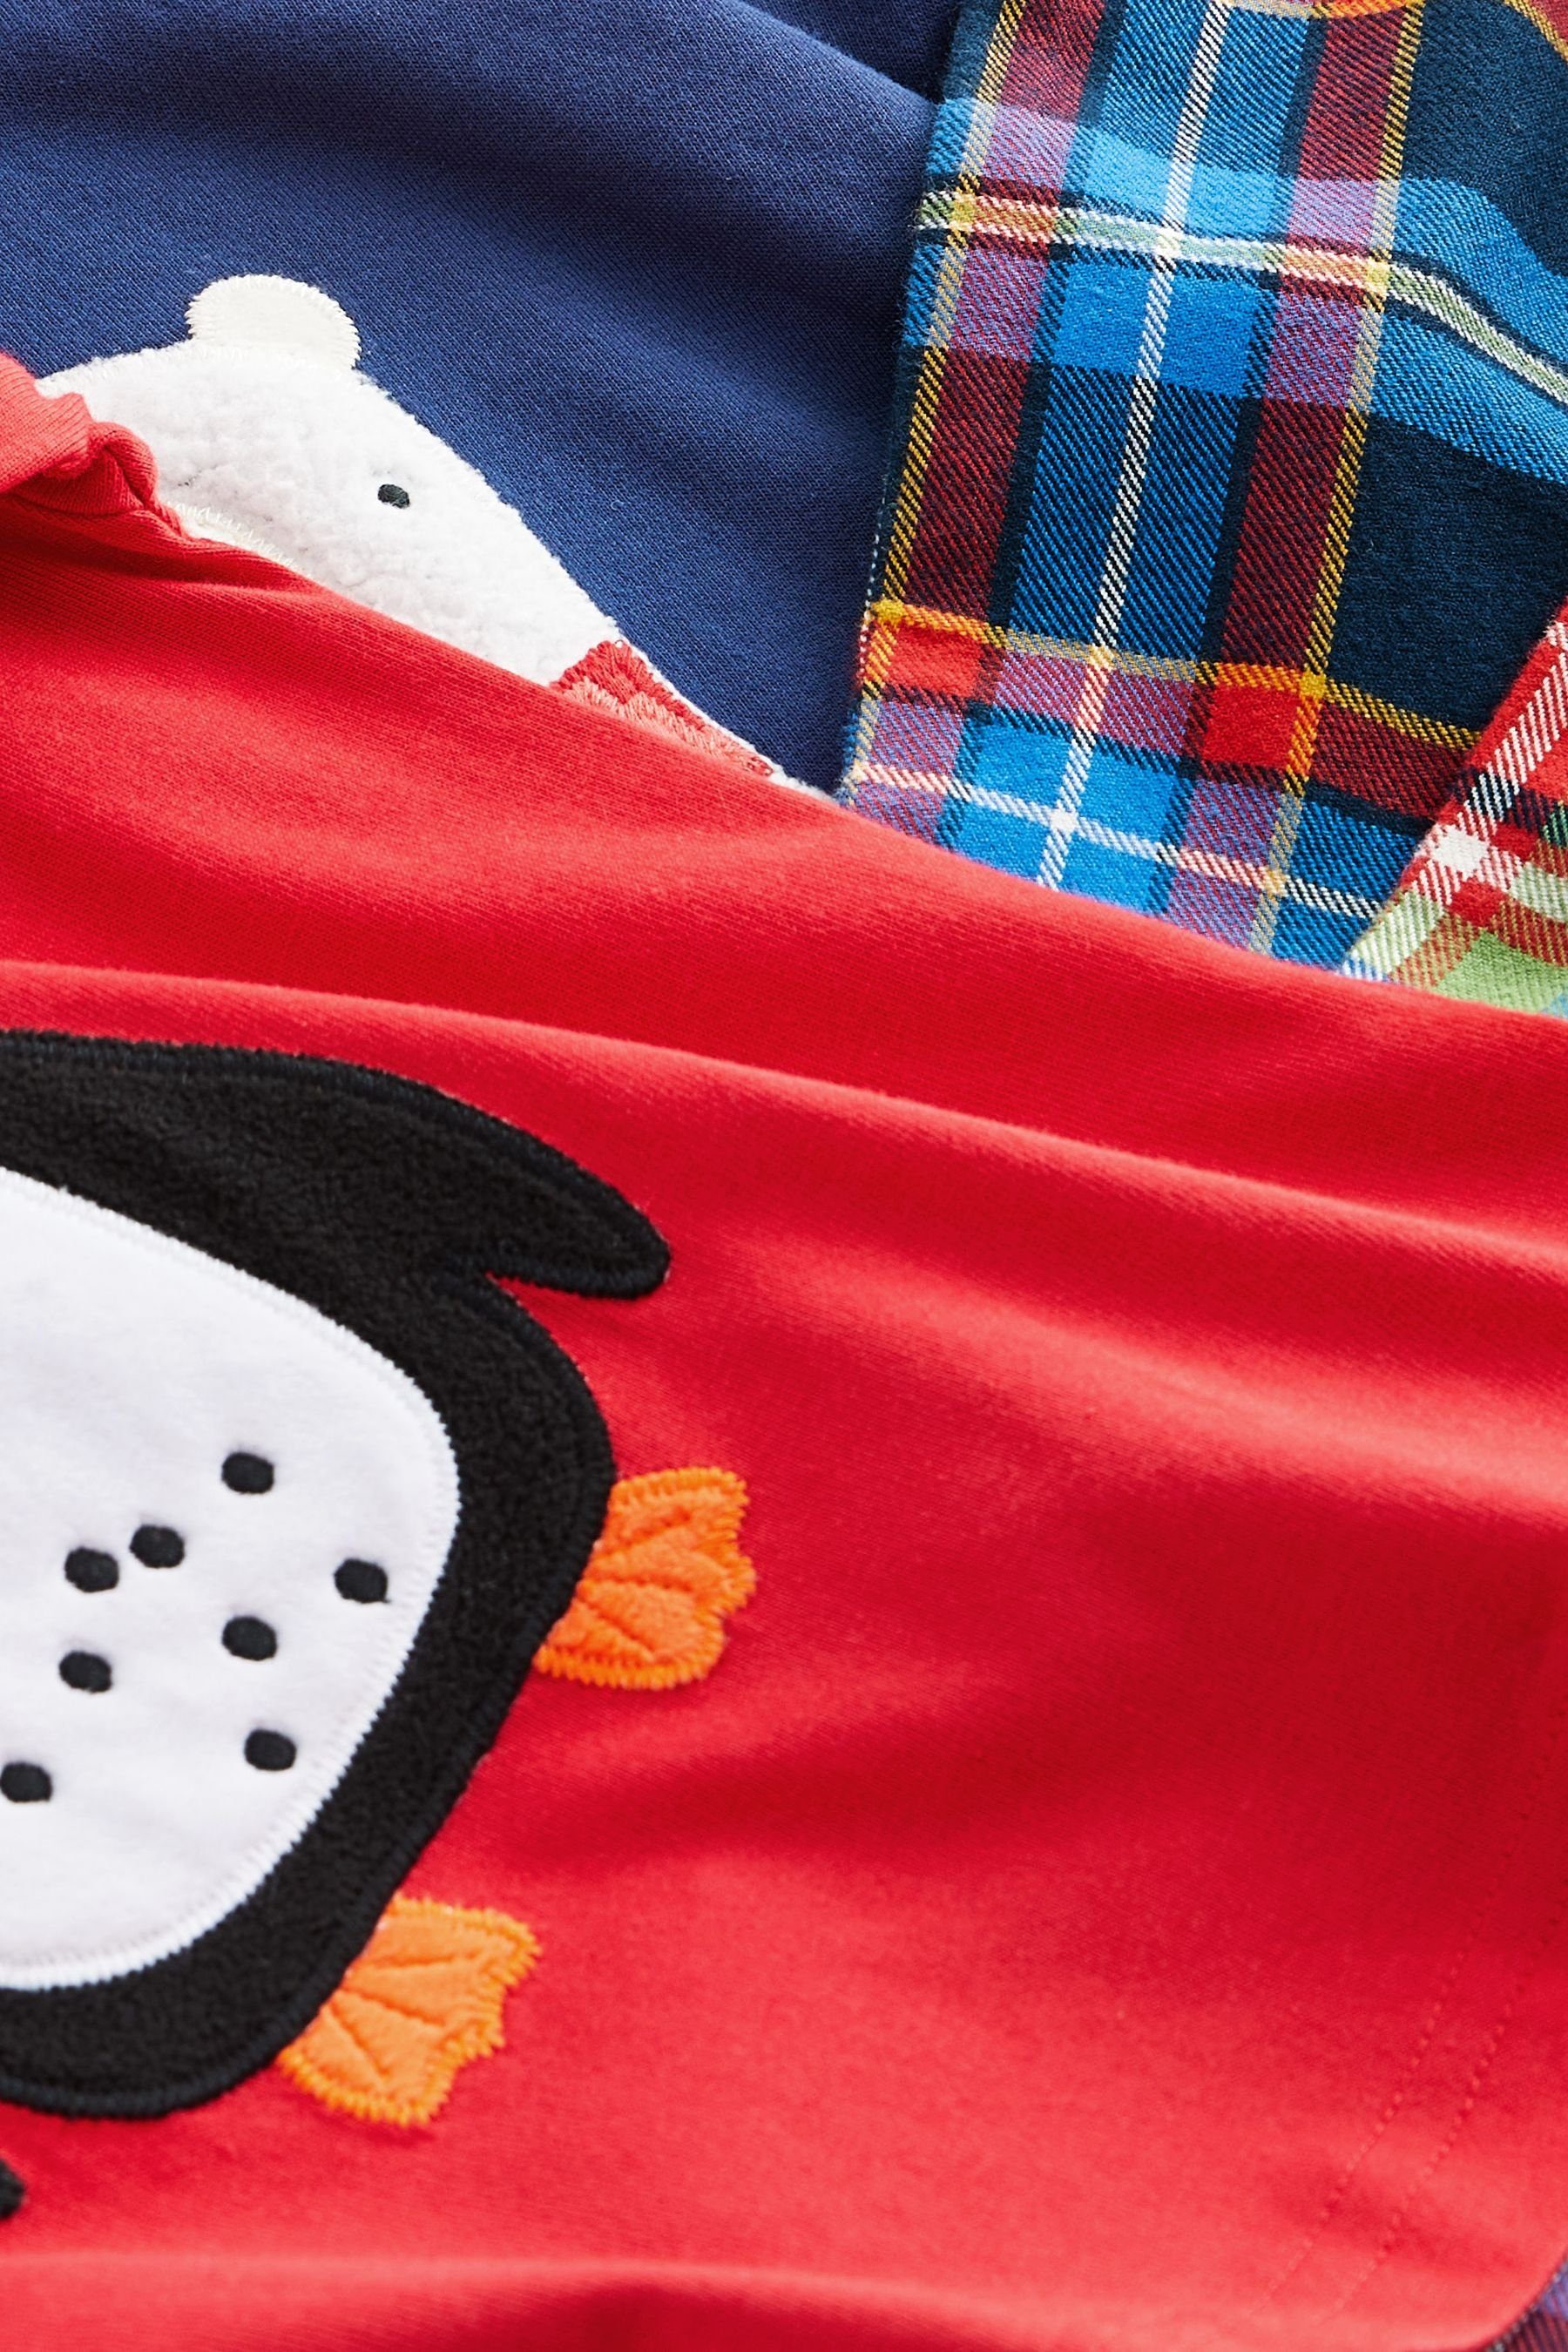 2er-Pack Navy Polar And (4 Pyjama Penguin Pyjama, tlg) Bear Next Blue/Red Karierter